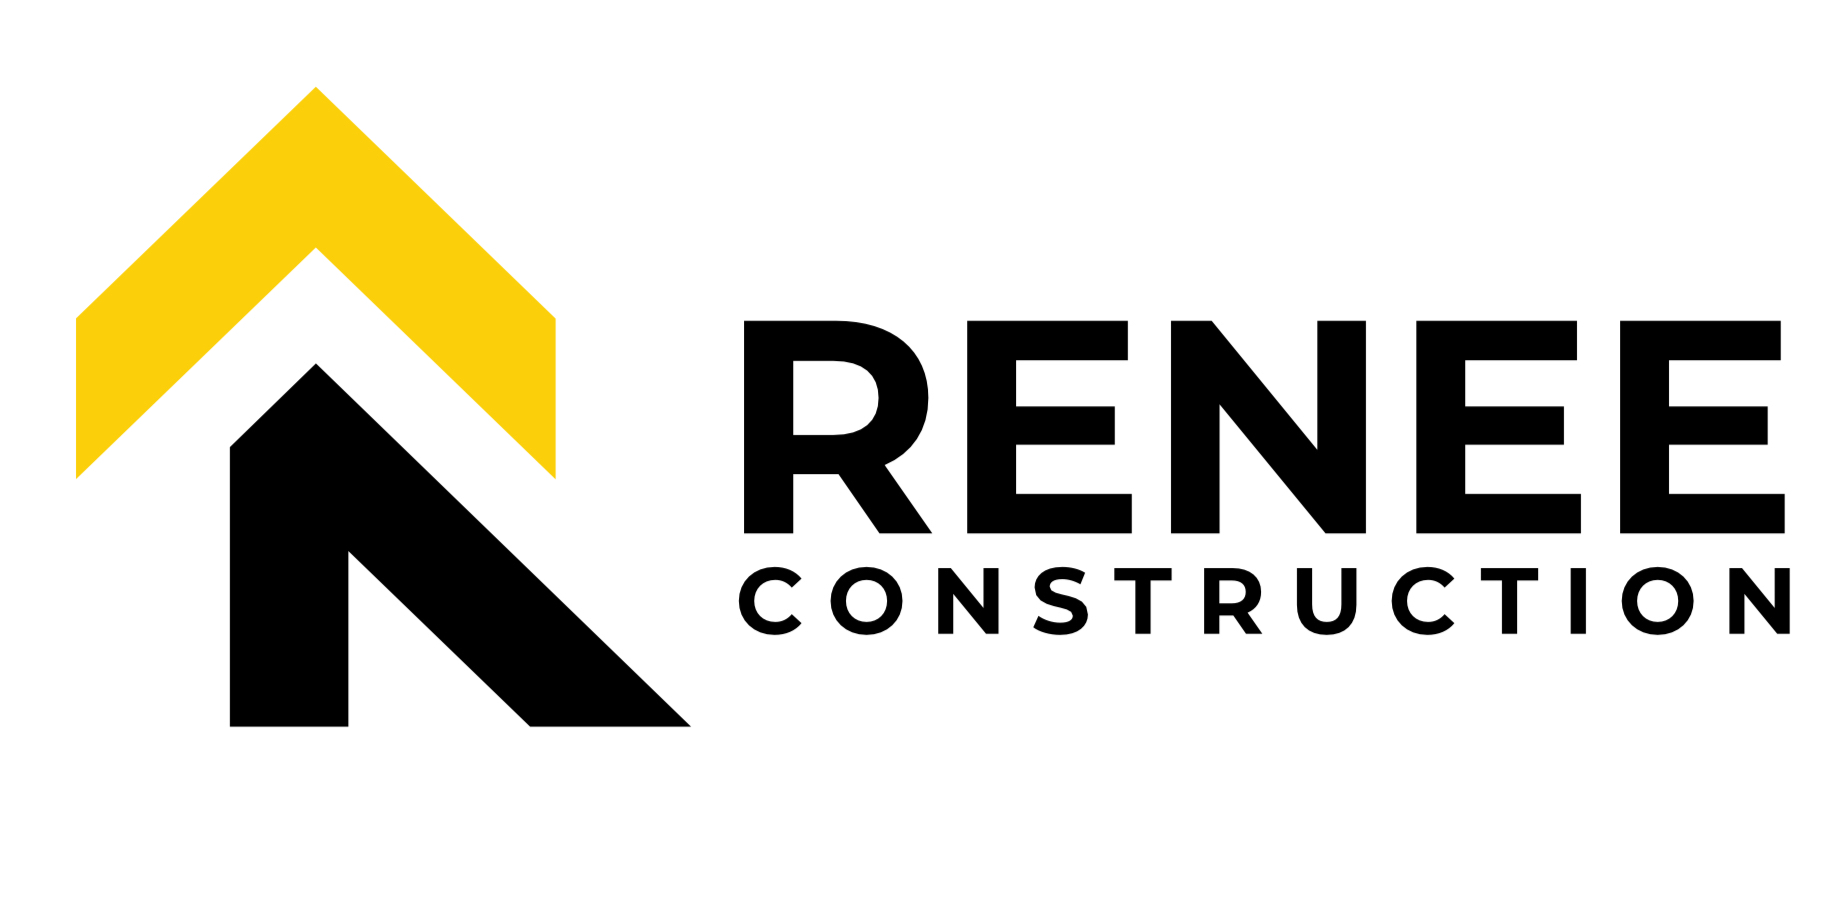 Renee's Construction Co Ltd